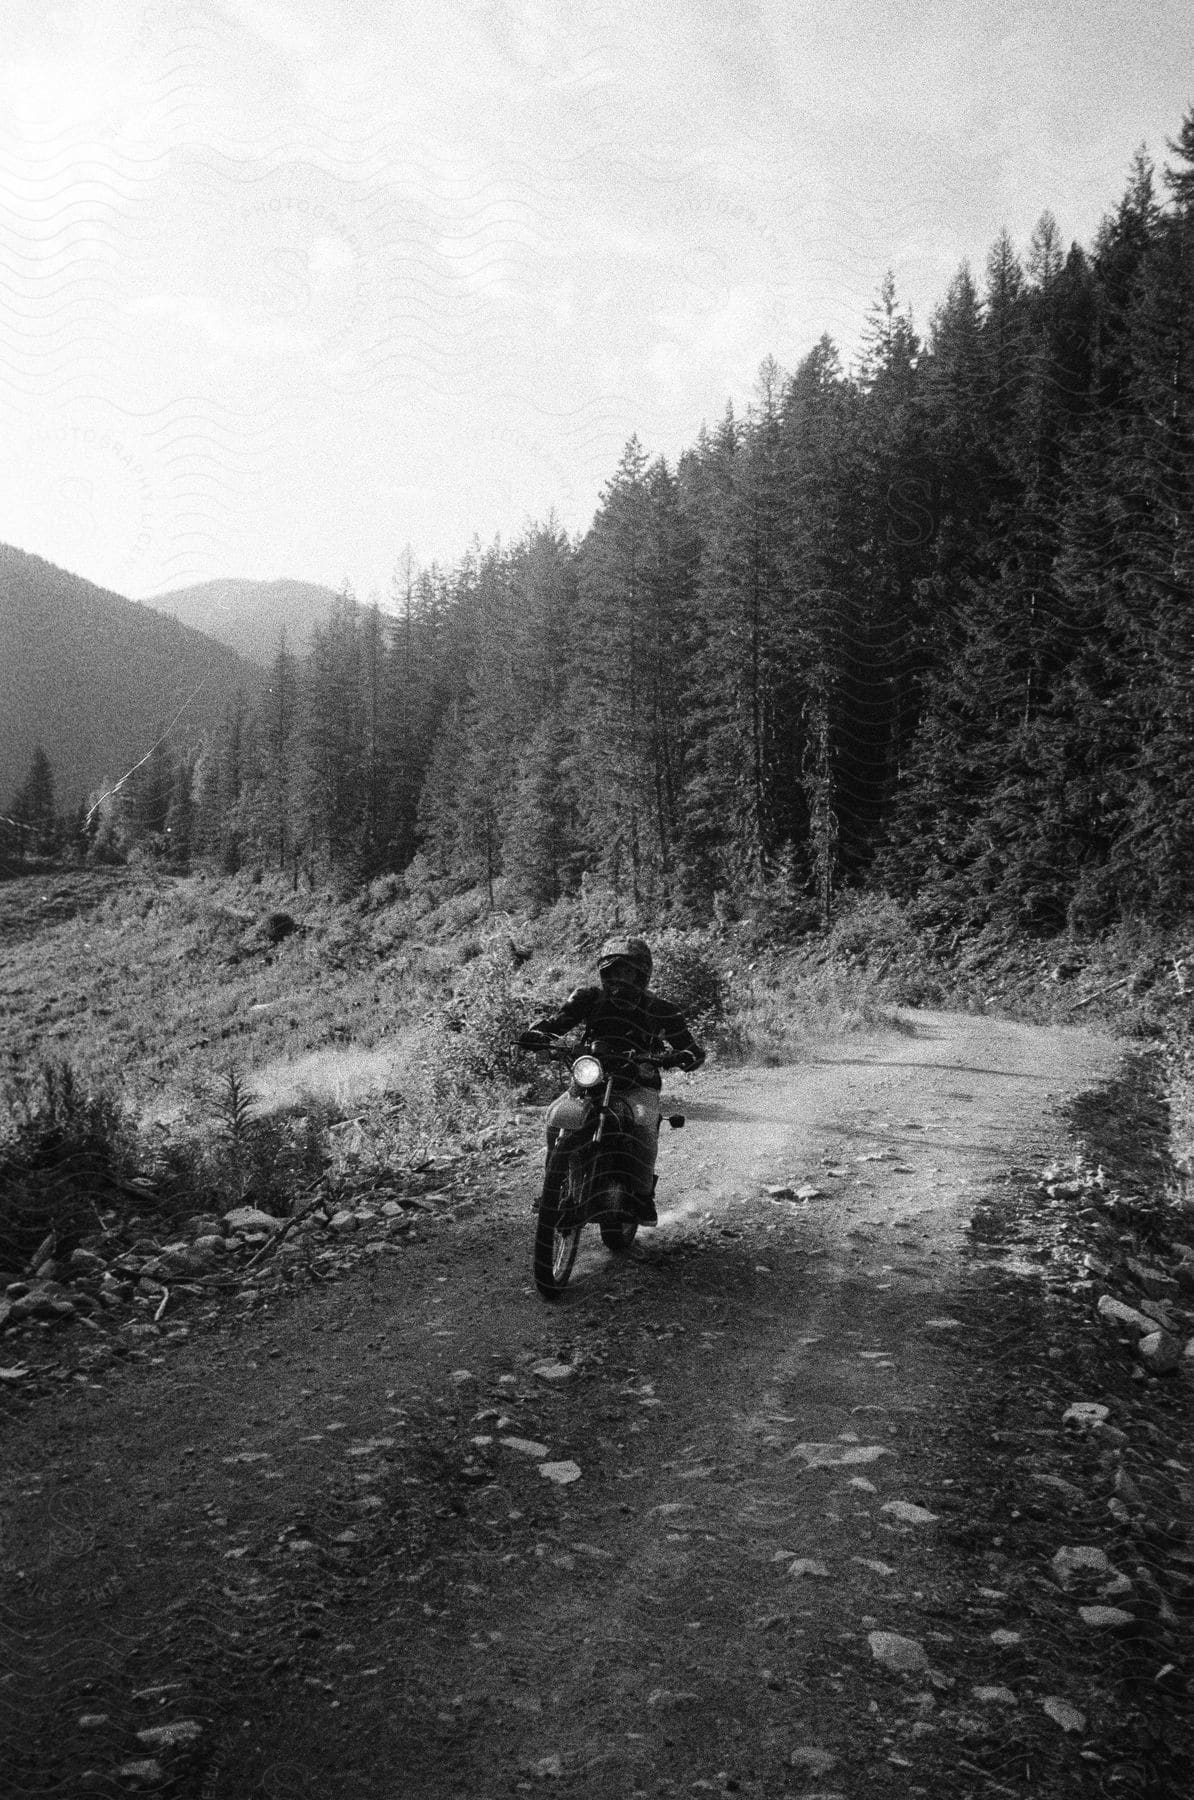 Biker rides dirt bike along country road near forest